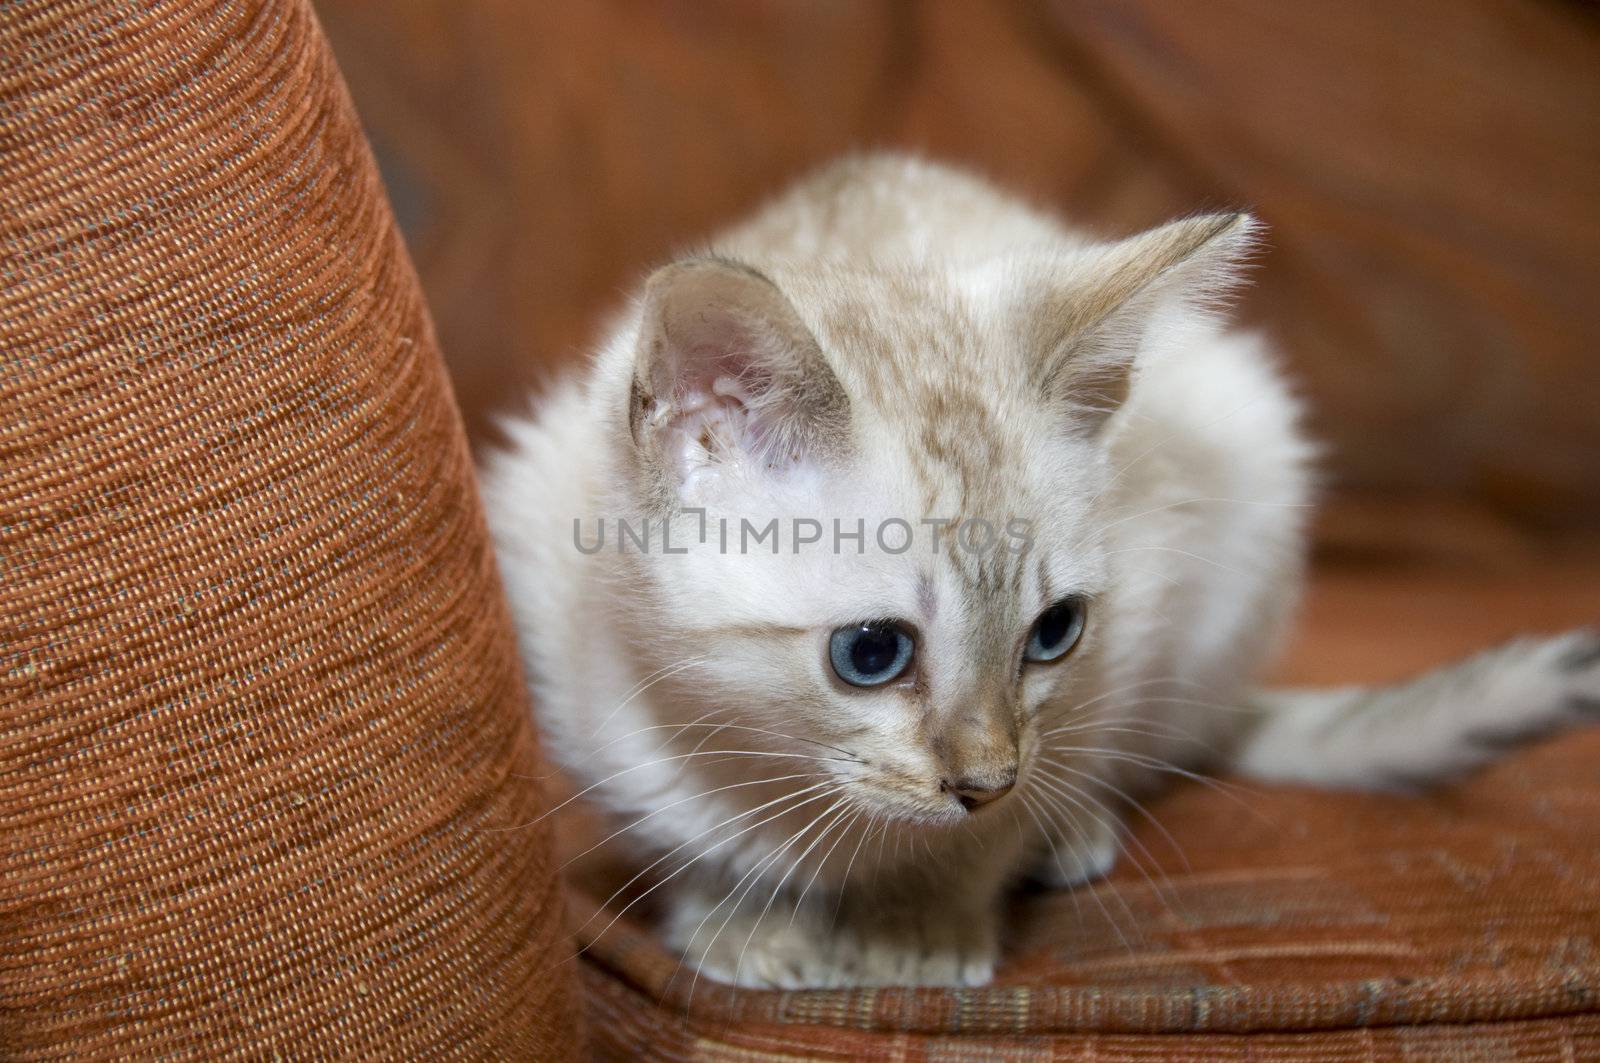 A kitten sitting on an orange couch